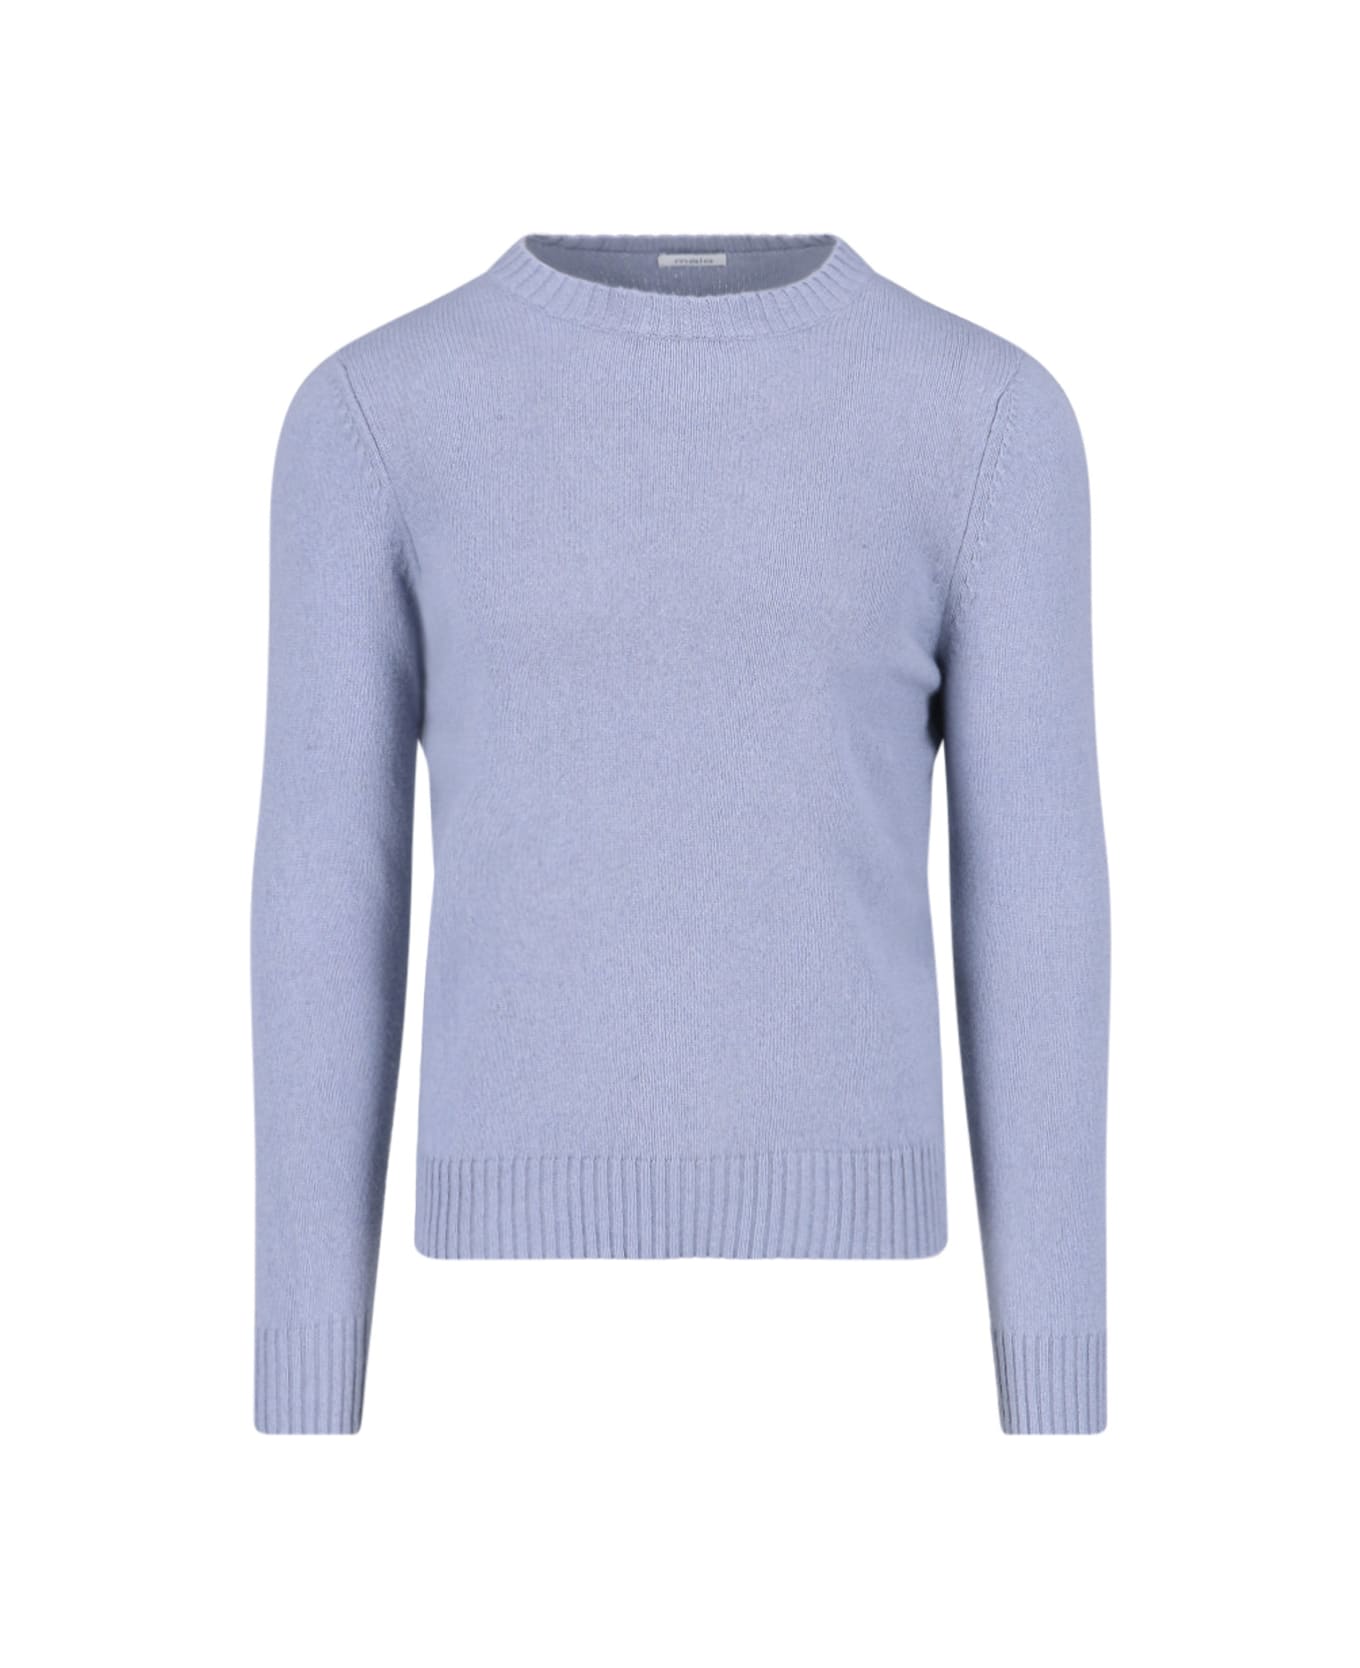 Malo Cashmere Sweater - Light Blue ニットウェア